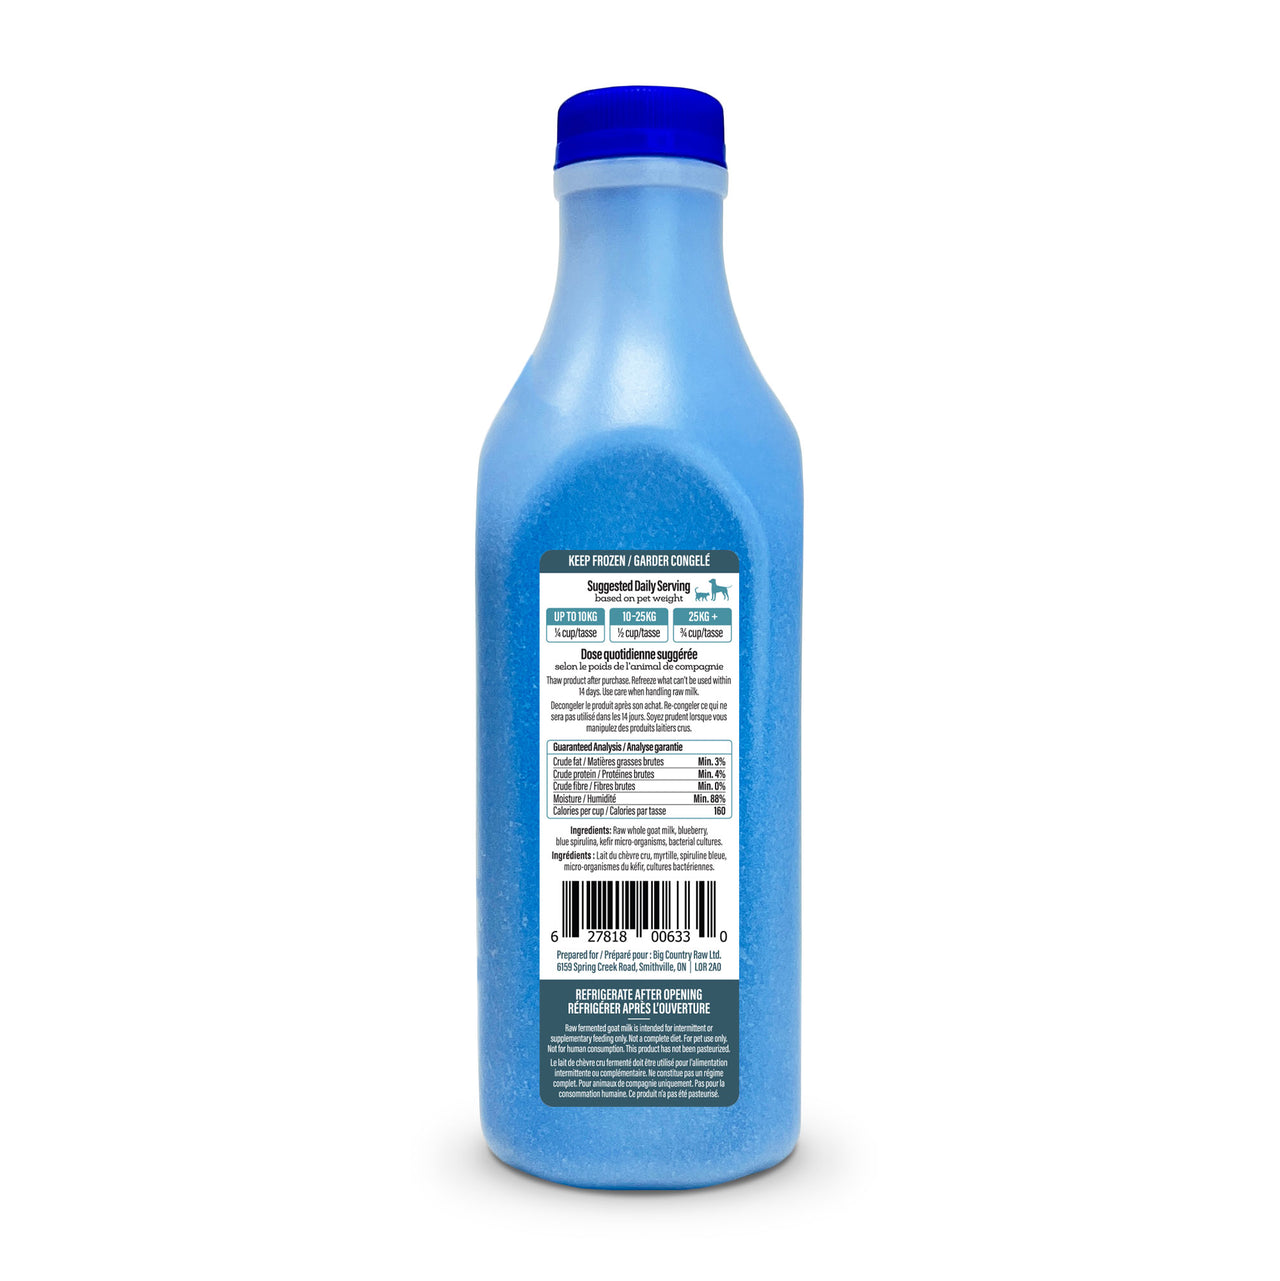 BCR Big Country Raw Supplements Goat Milk Antioxidants (Blue) 975ml